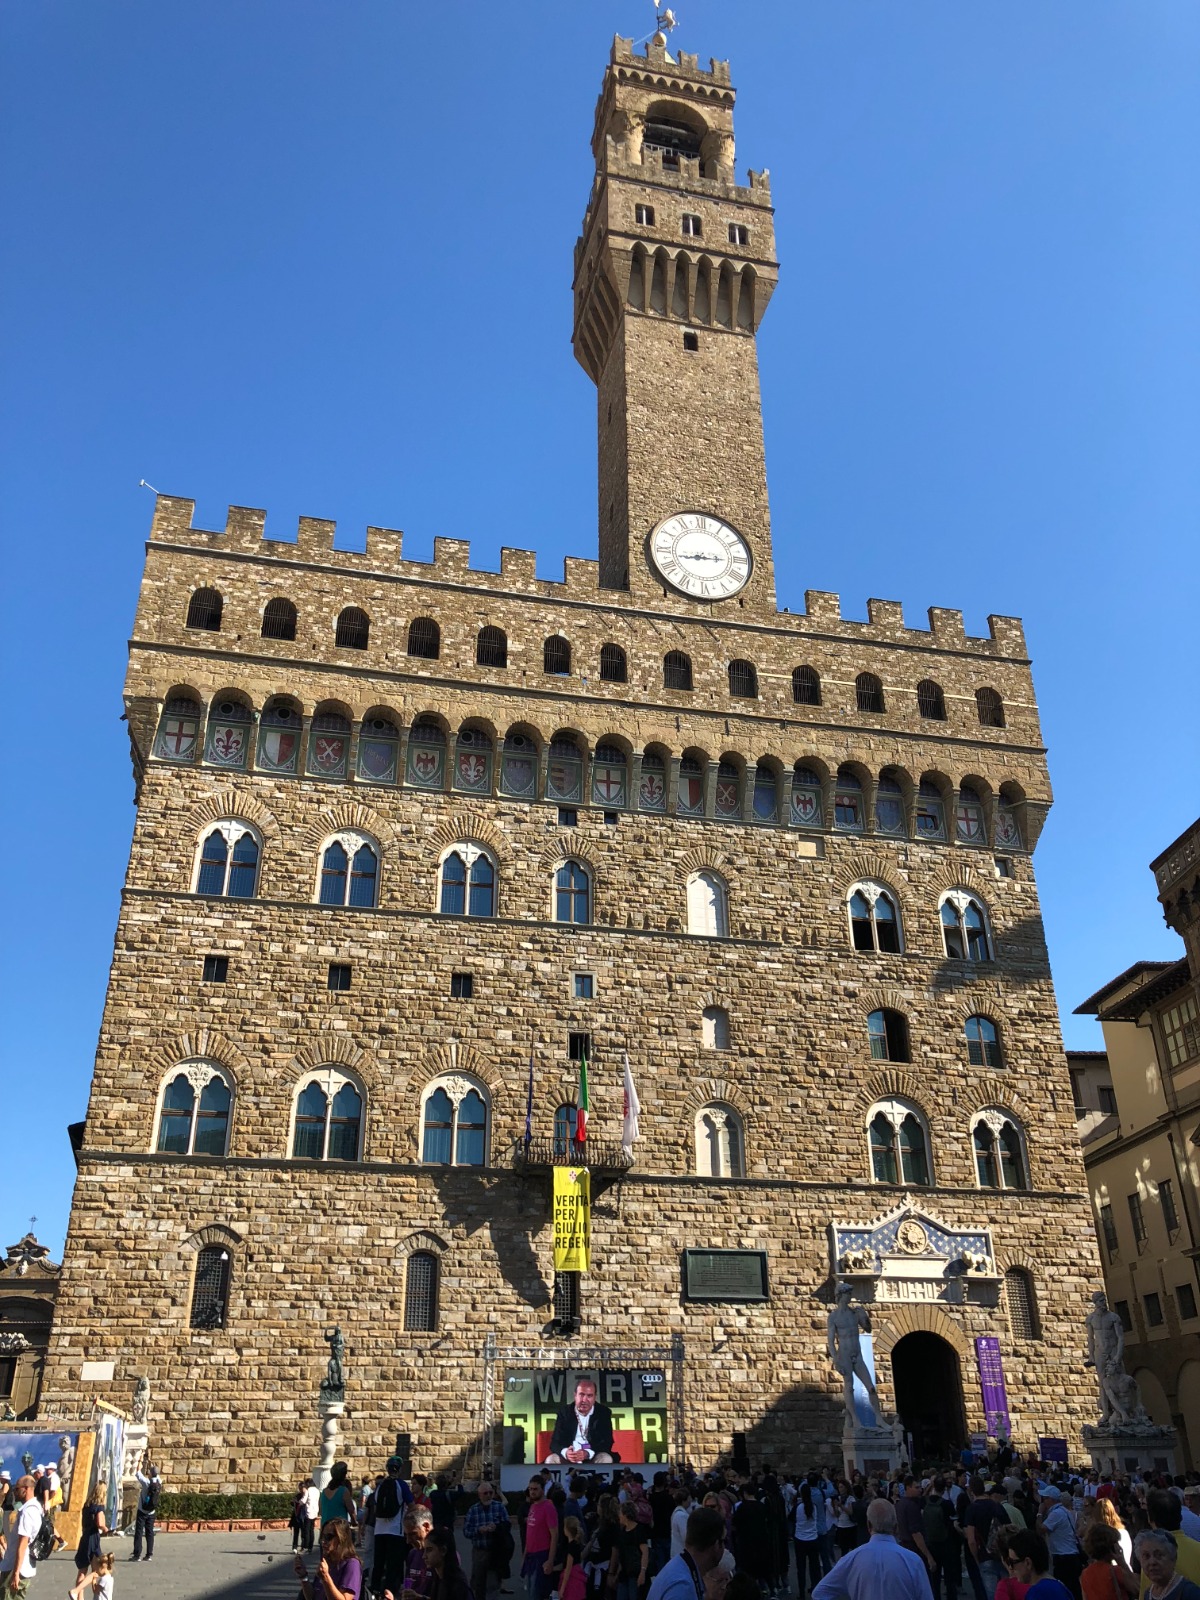 Firenze rådhus